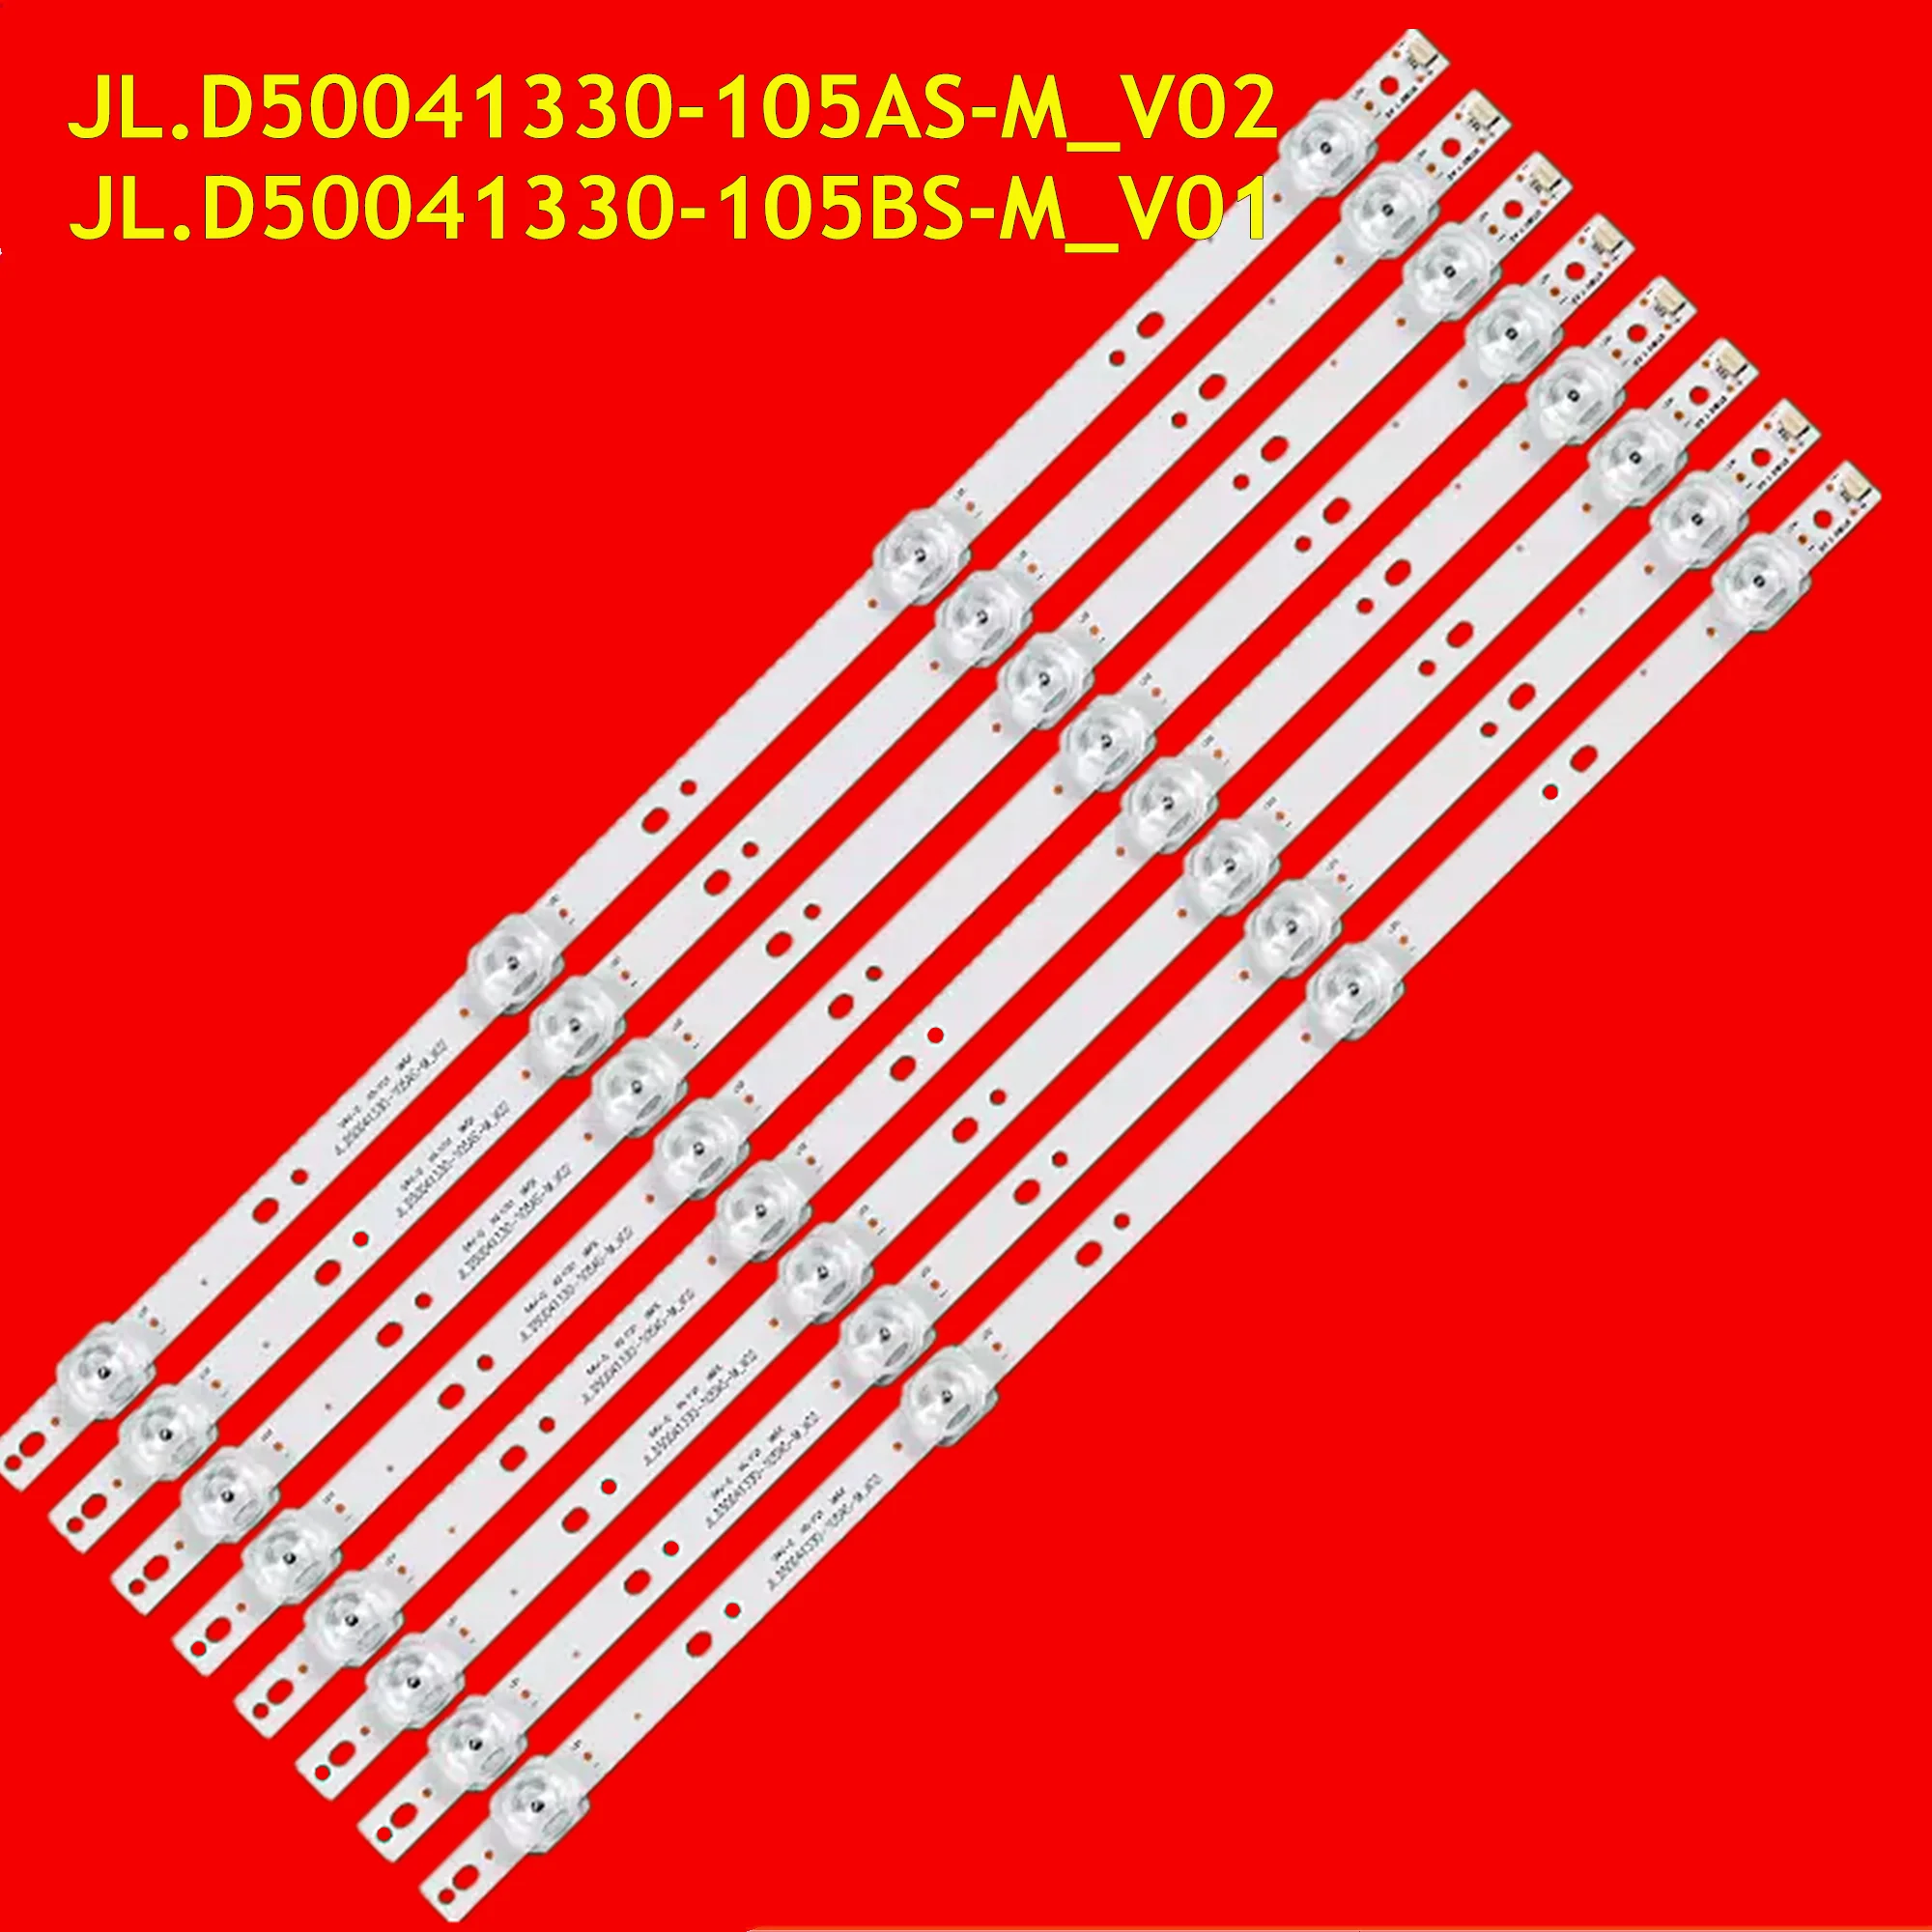 HY-C490C6 HX-50A55D LED Ʈ, PT500GT01-1 JL.D50041330-105AS-M_V02 JL.D50041330-105BS-M_V01, MX50, MX3250, MX3255SG,